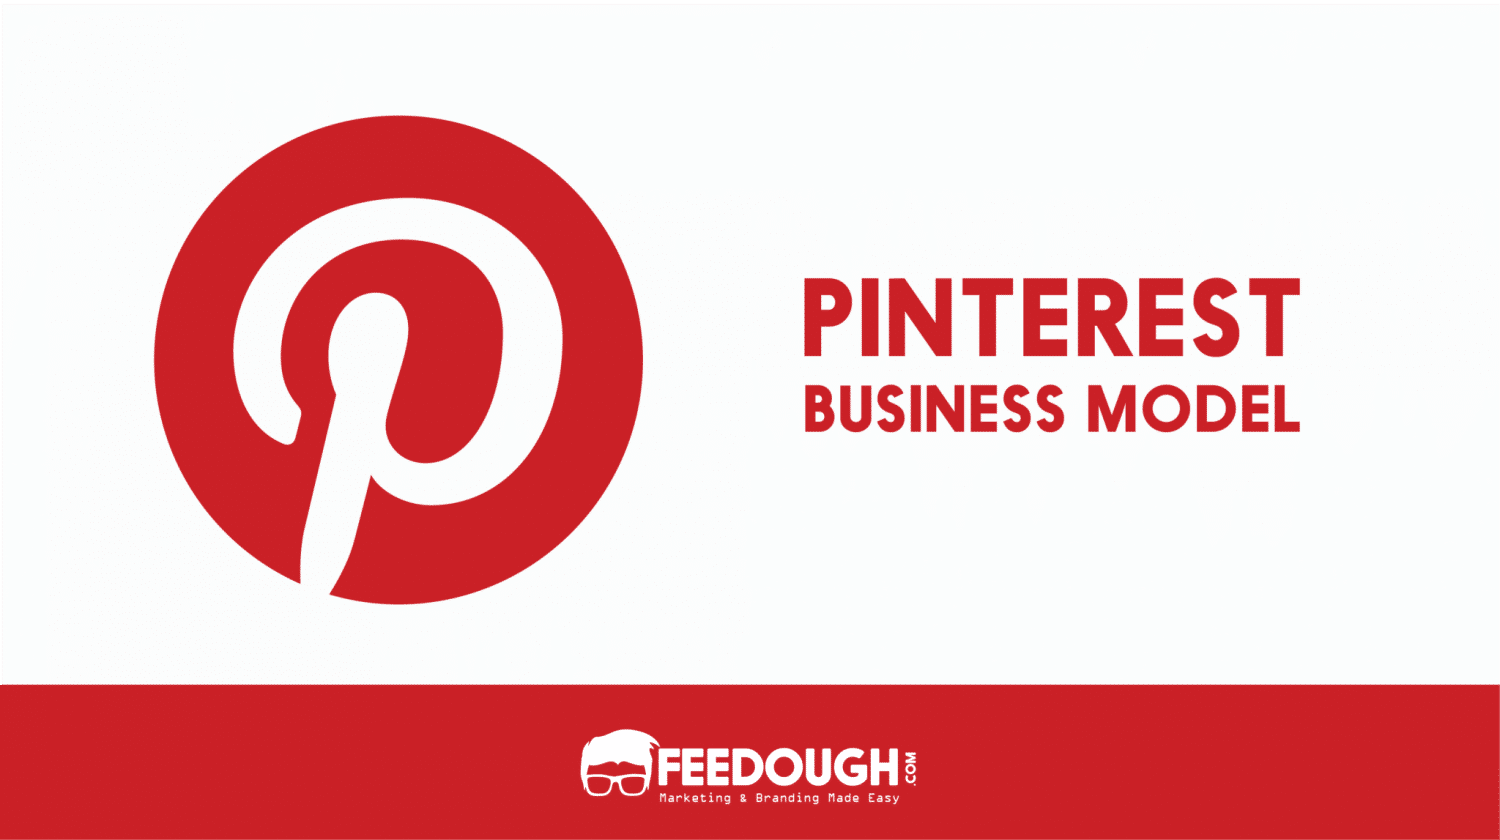 Pinterest Business Model Feedough PNG